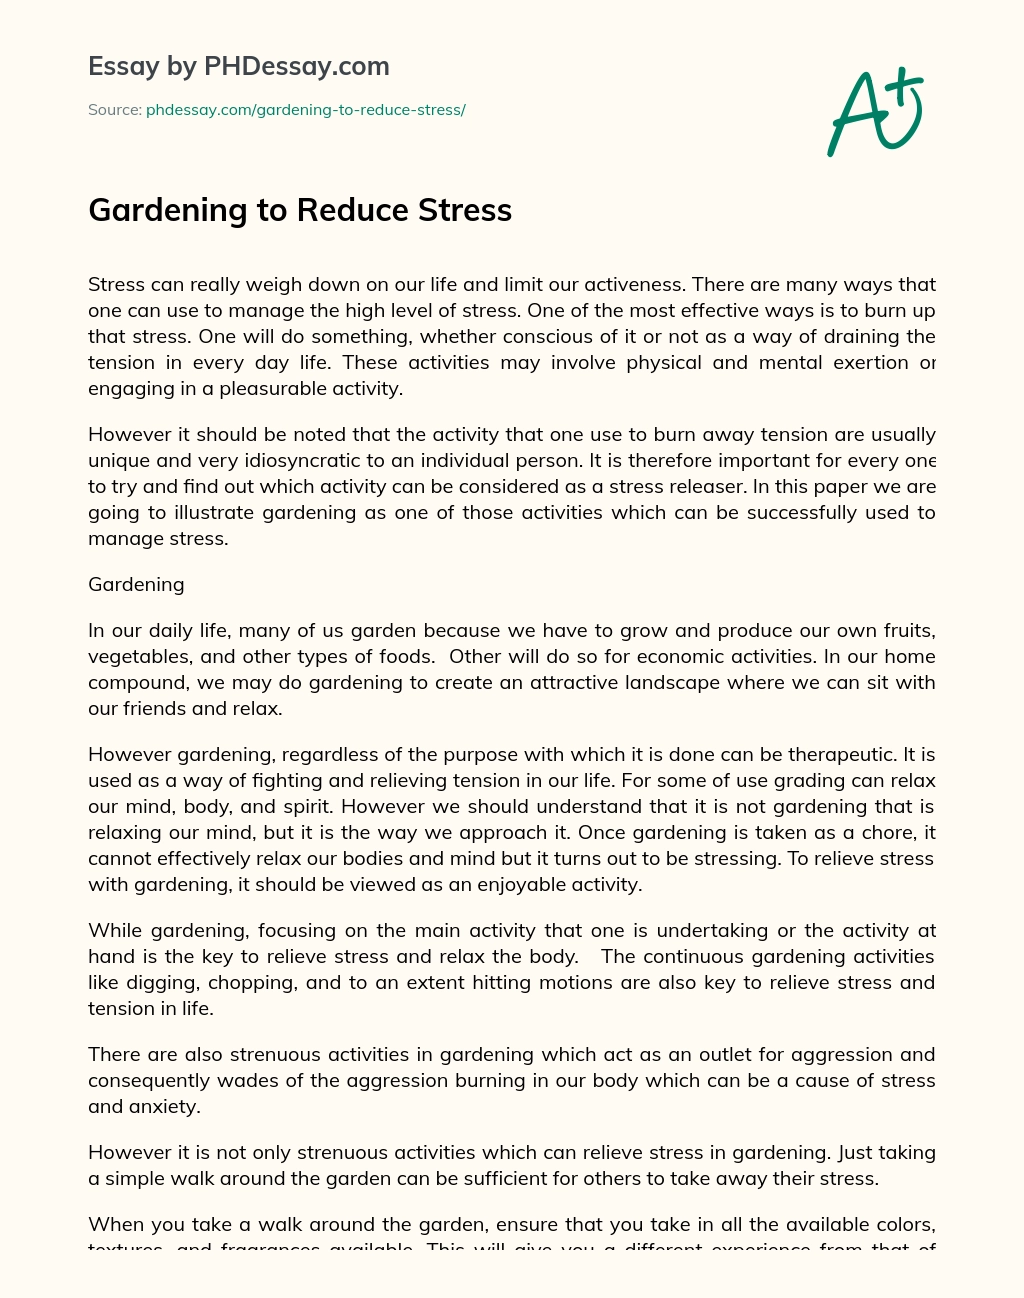 Gardening to Reduce Stress essay